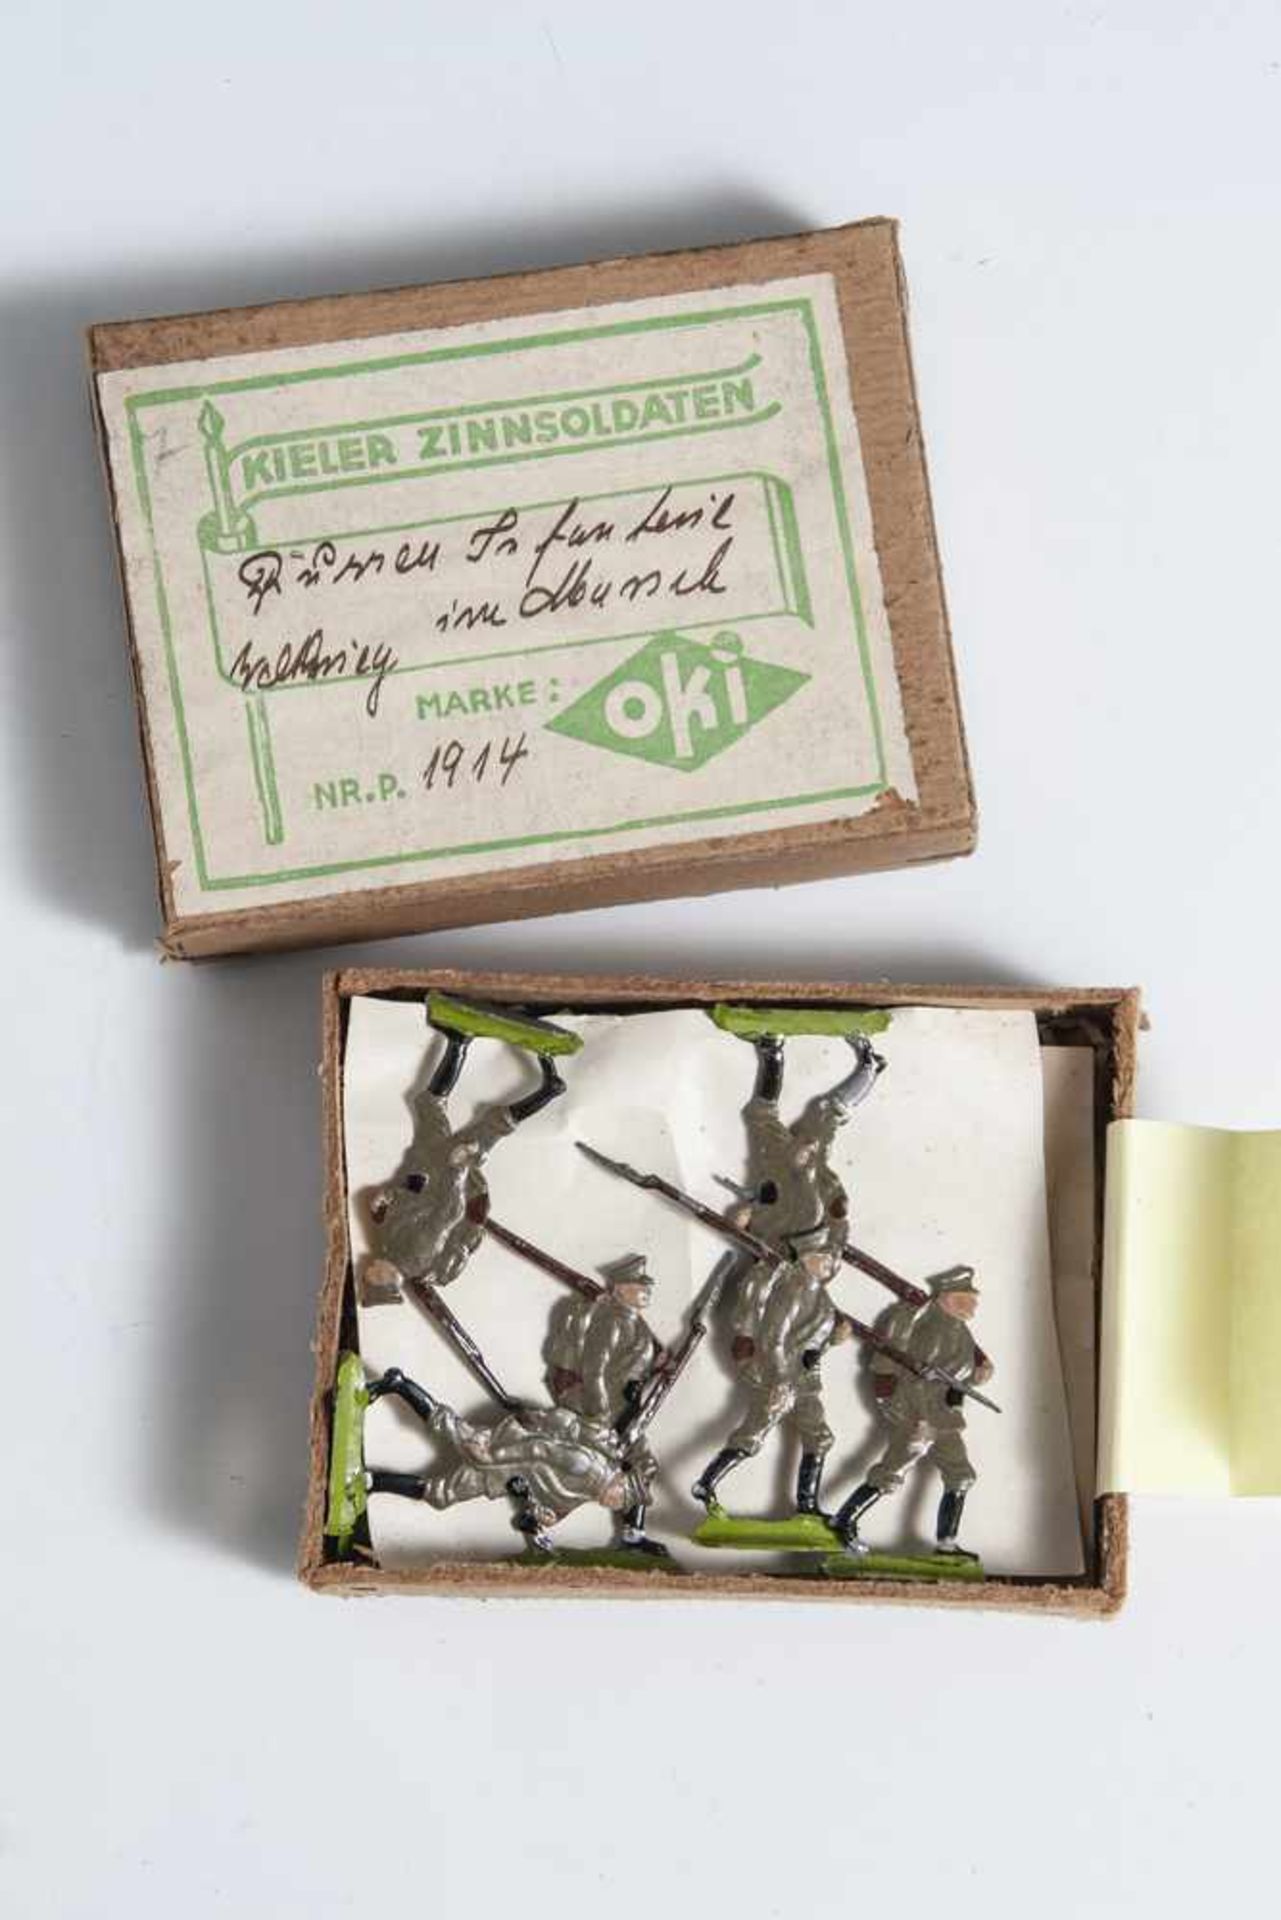 1 Schachtel Kieler Zinnsoldaten, "Preuss. Infanterie", Nr. P. 1914, Marke Oki. In org. Schachtel.